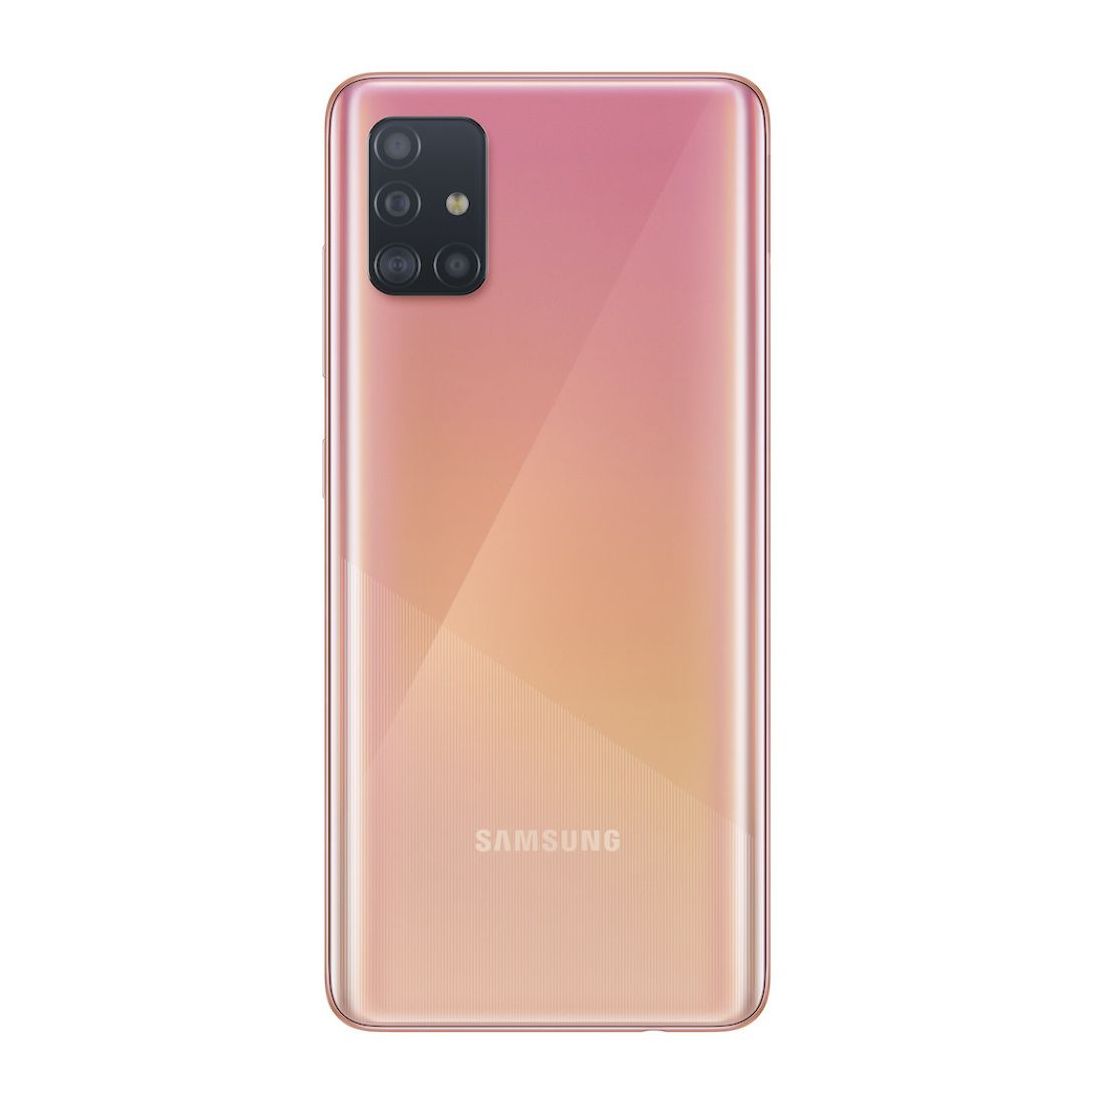 Samsung Galaxy A51 Smartphone 128GB/8GB LTE Prism Crush Pink